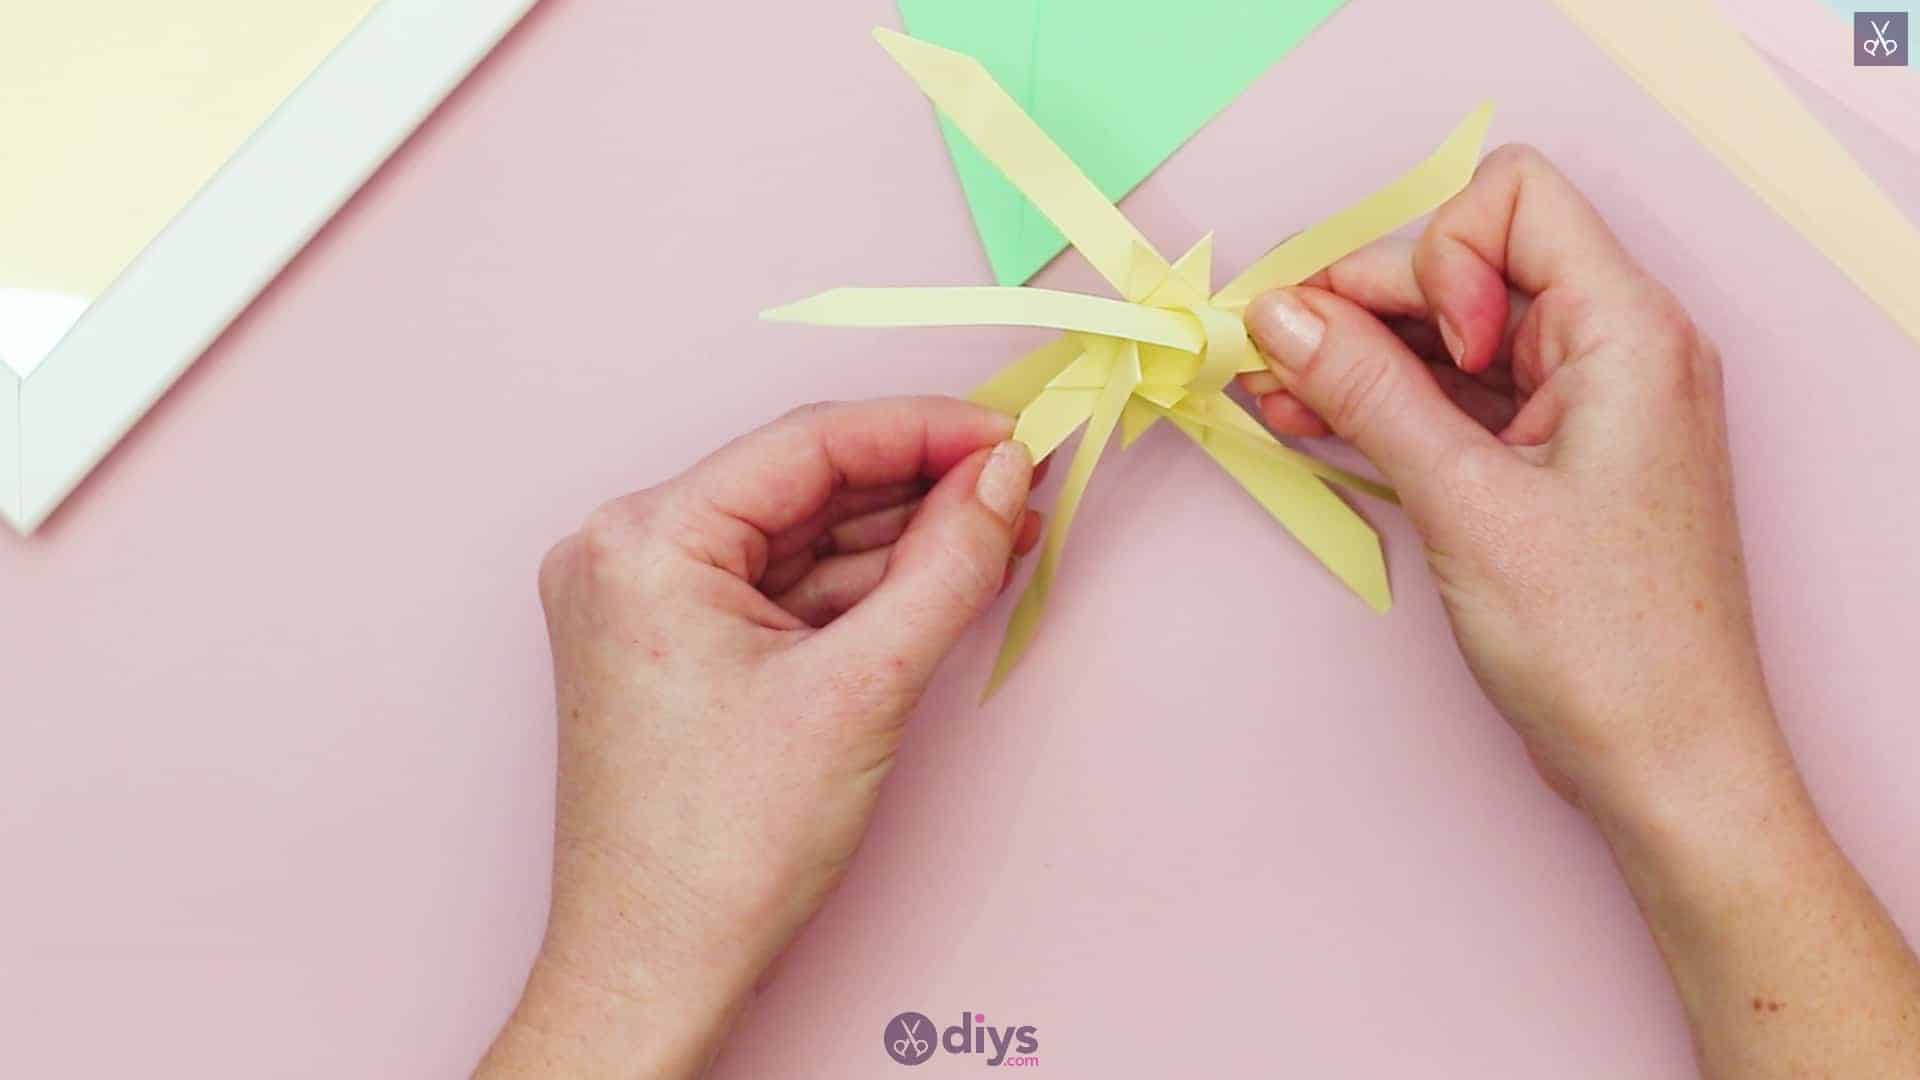 Diy origami flower art step 7b